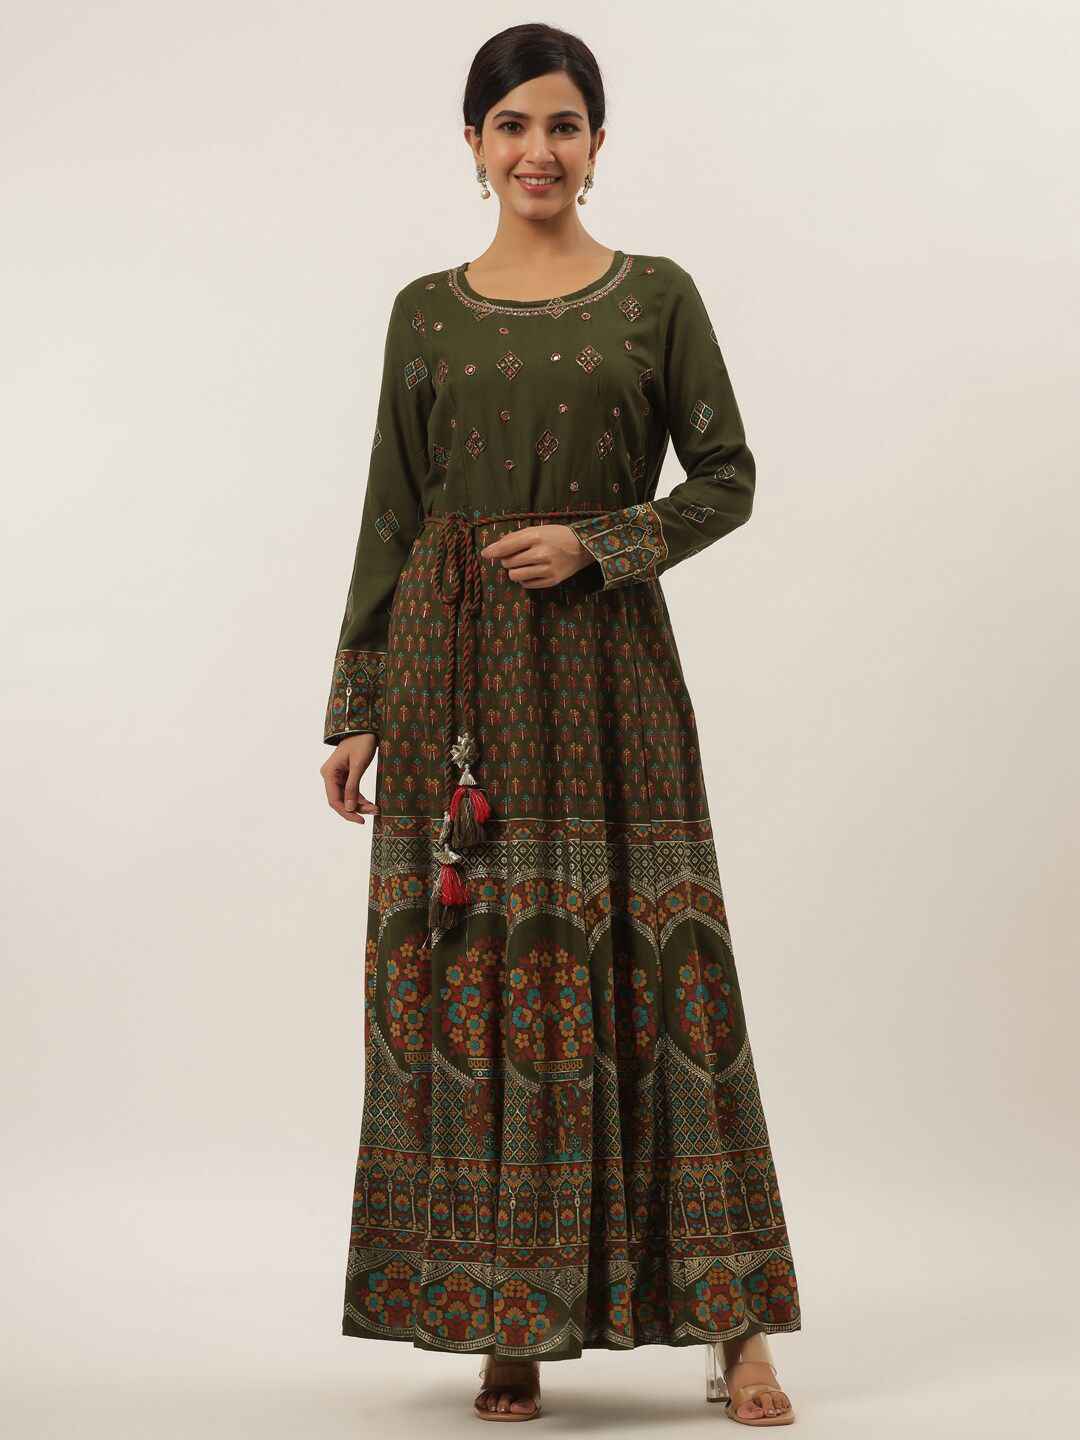 Yufta Green Cotton Ethnic Maxi Dress Price in India